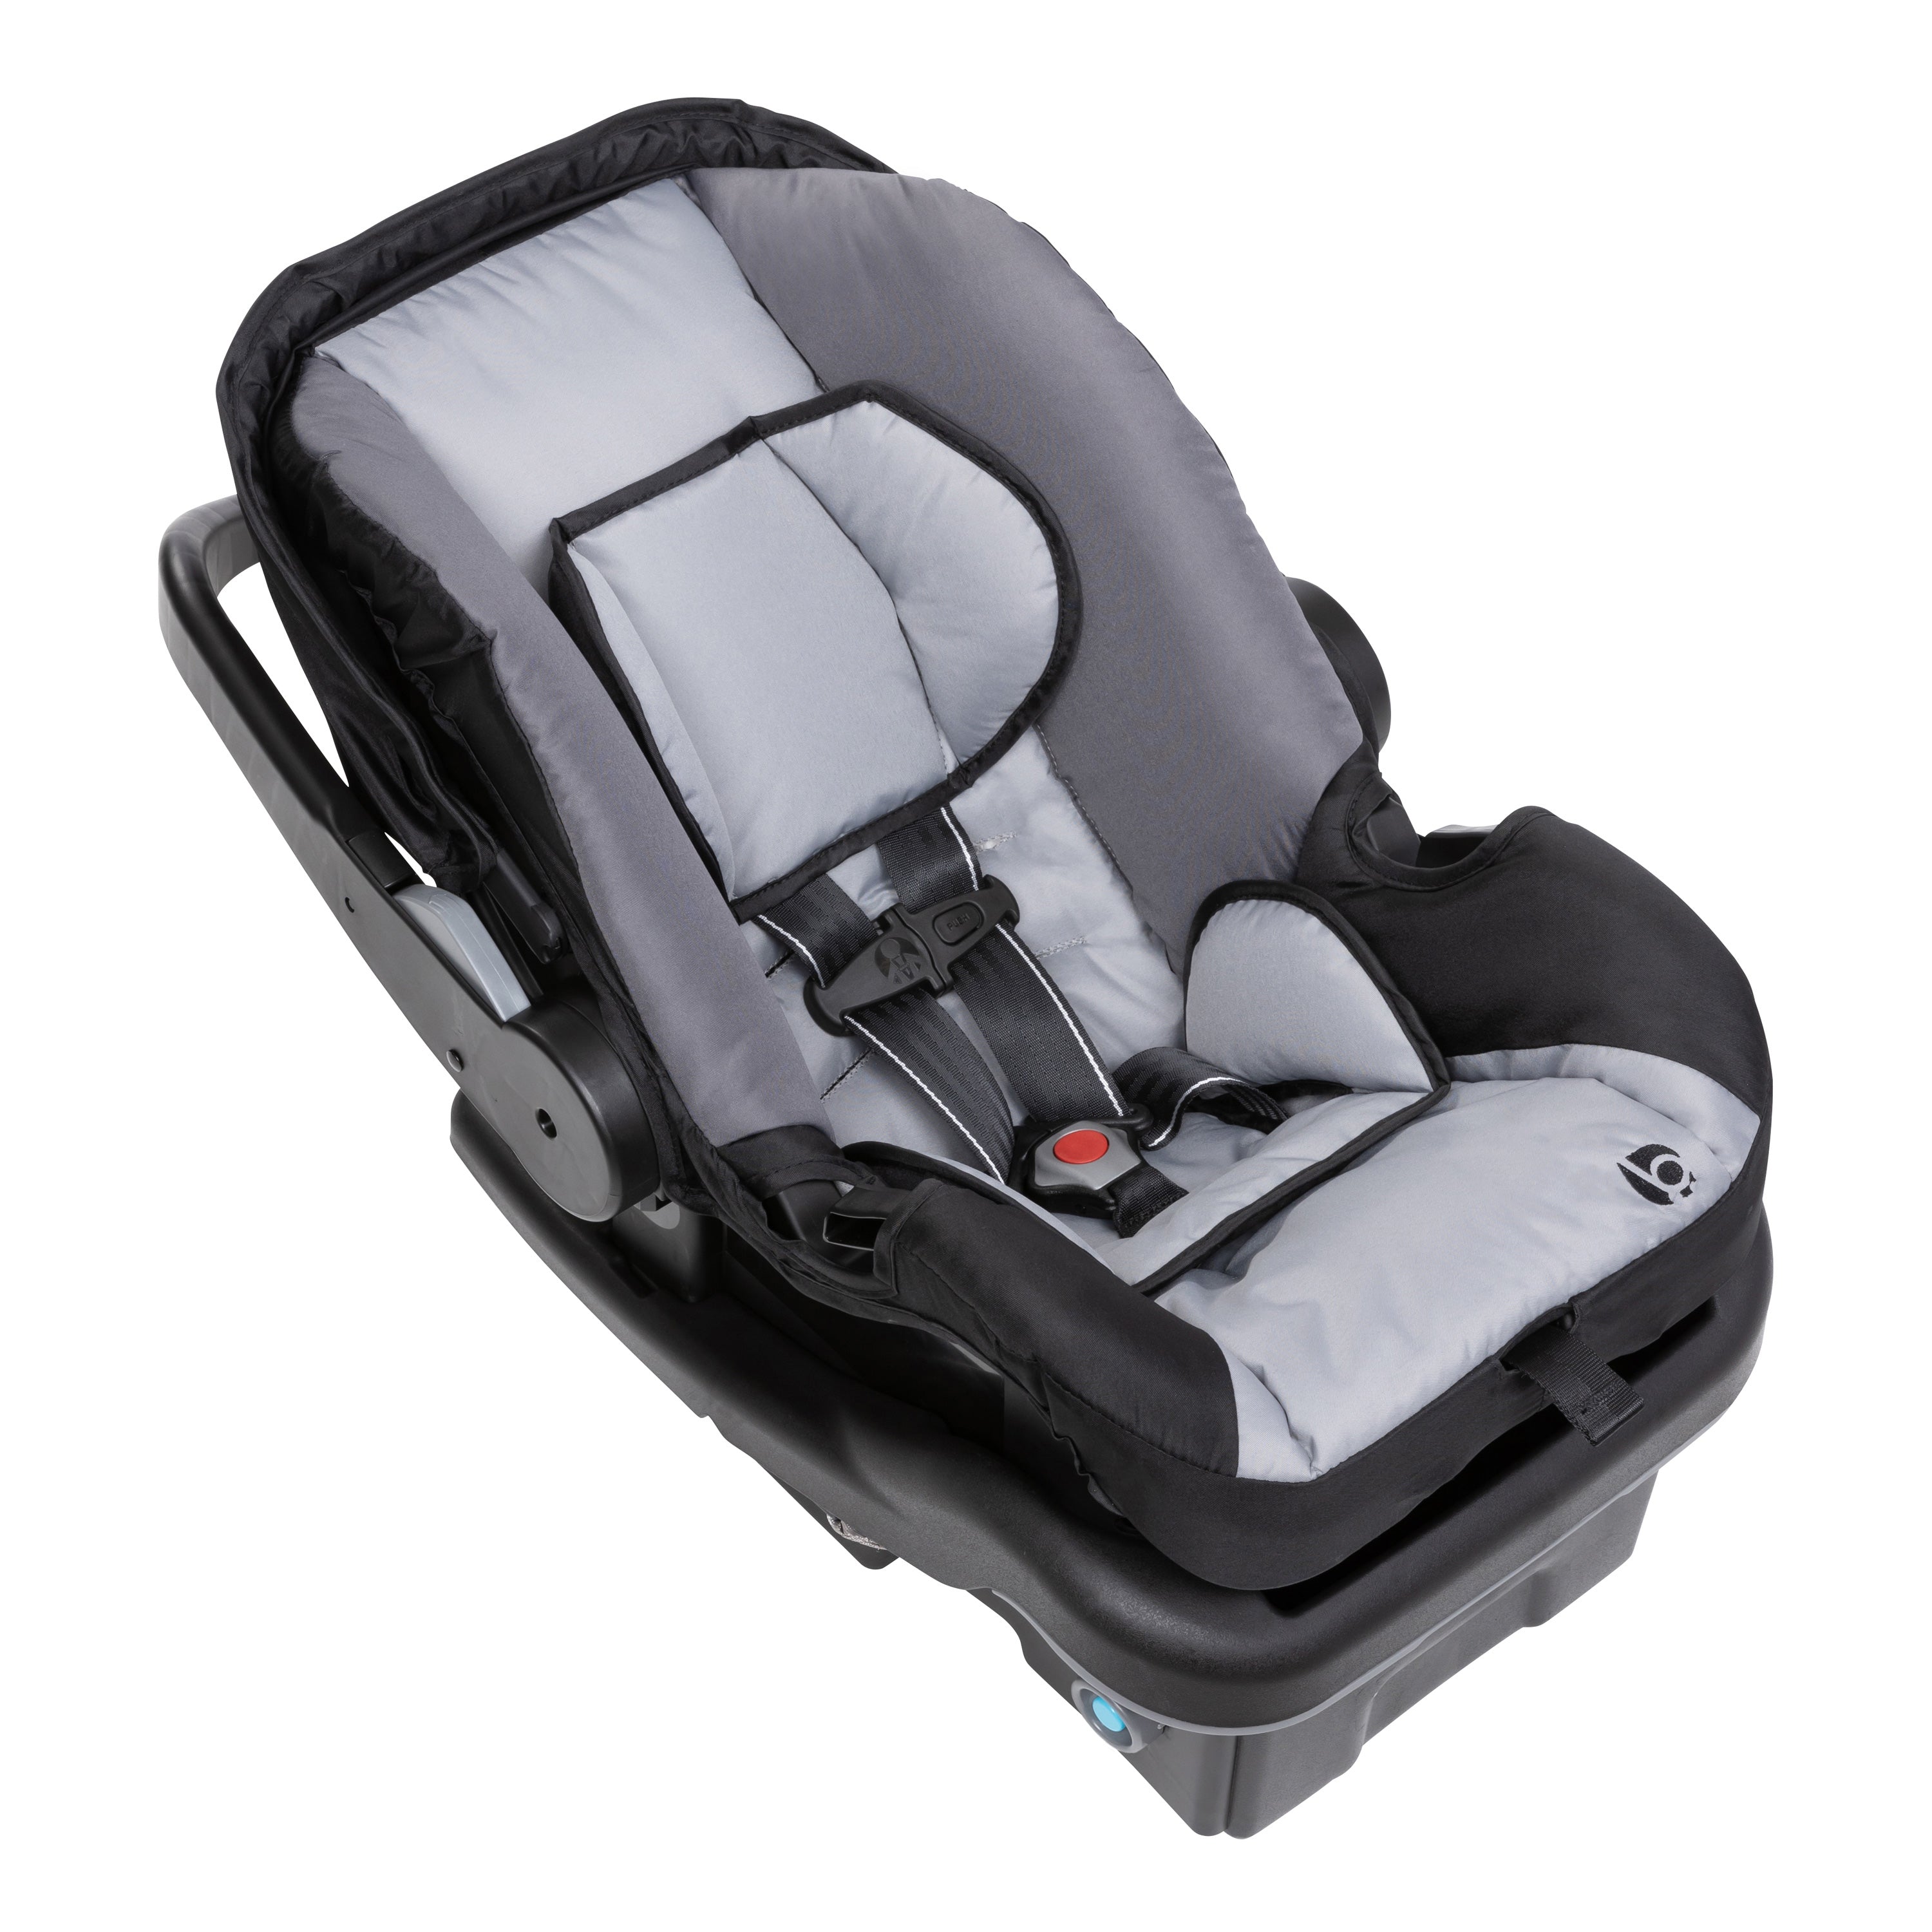  Baby Trend EZ-Lift™ 35 Plus Infant Car Seat, Dash Black : Baby